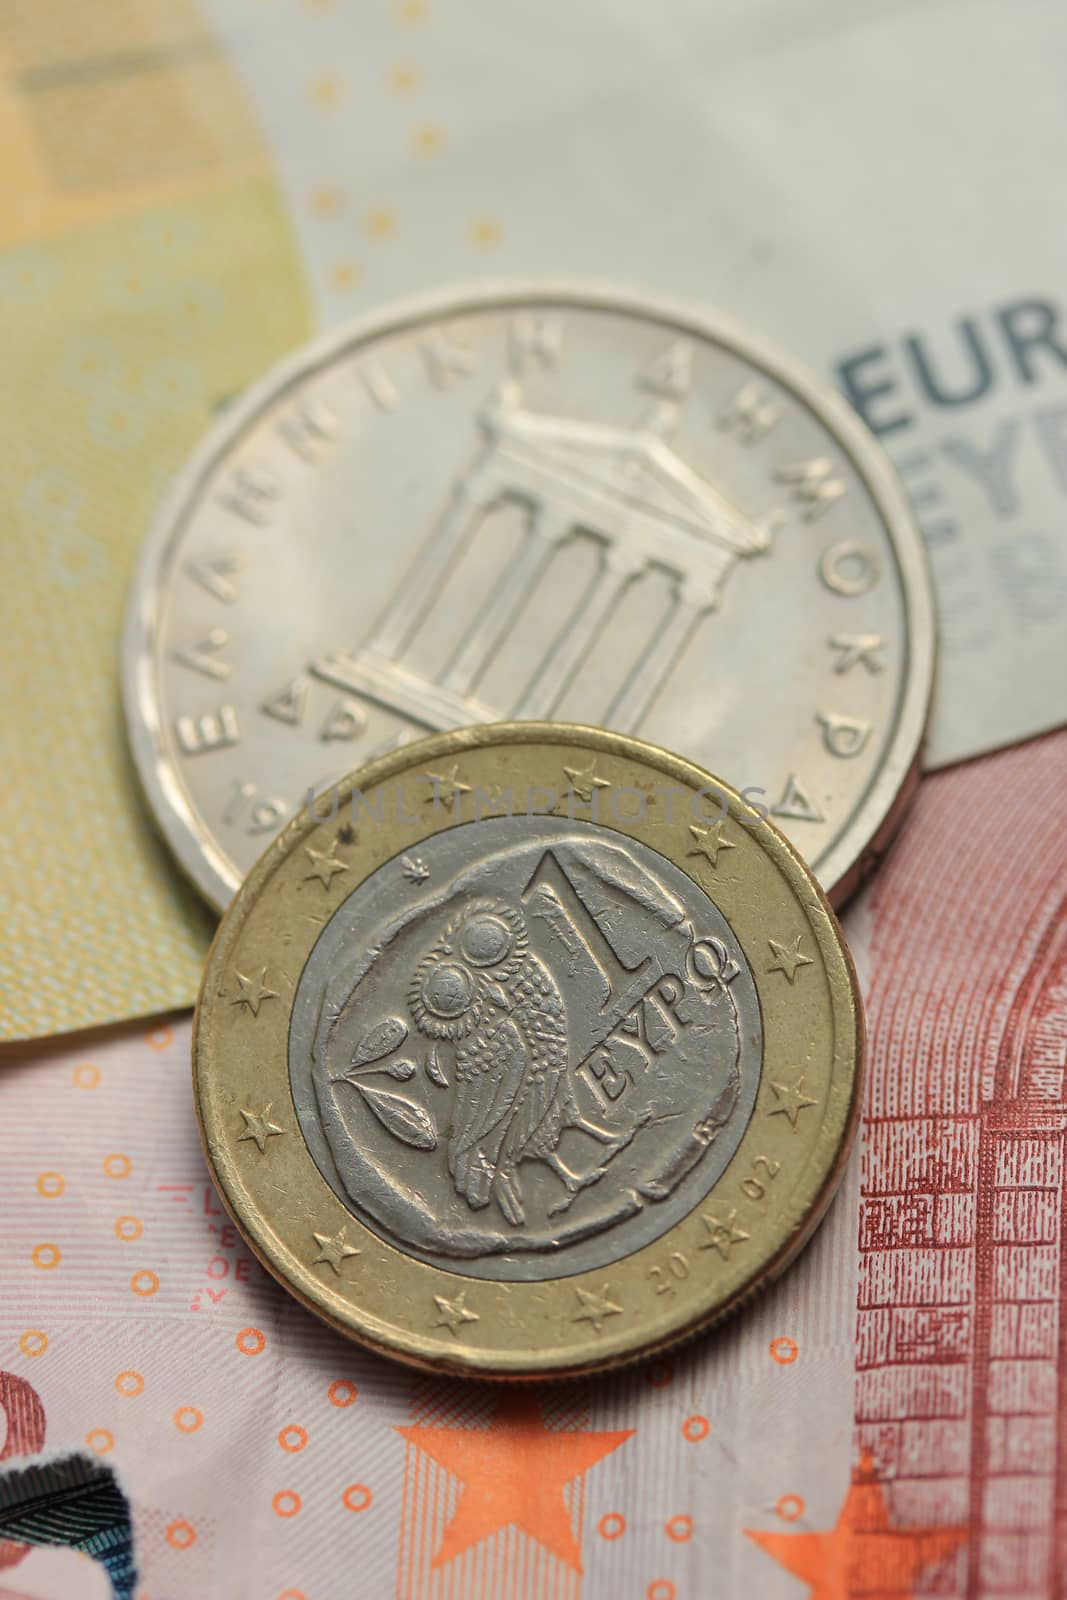 Greek and euro money by studioportosabbia